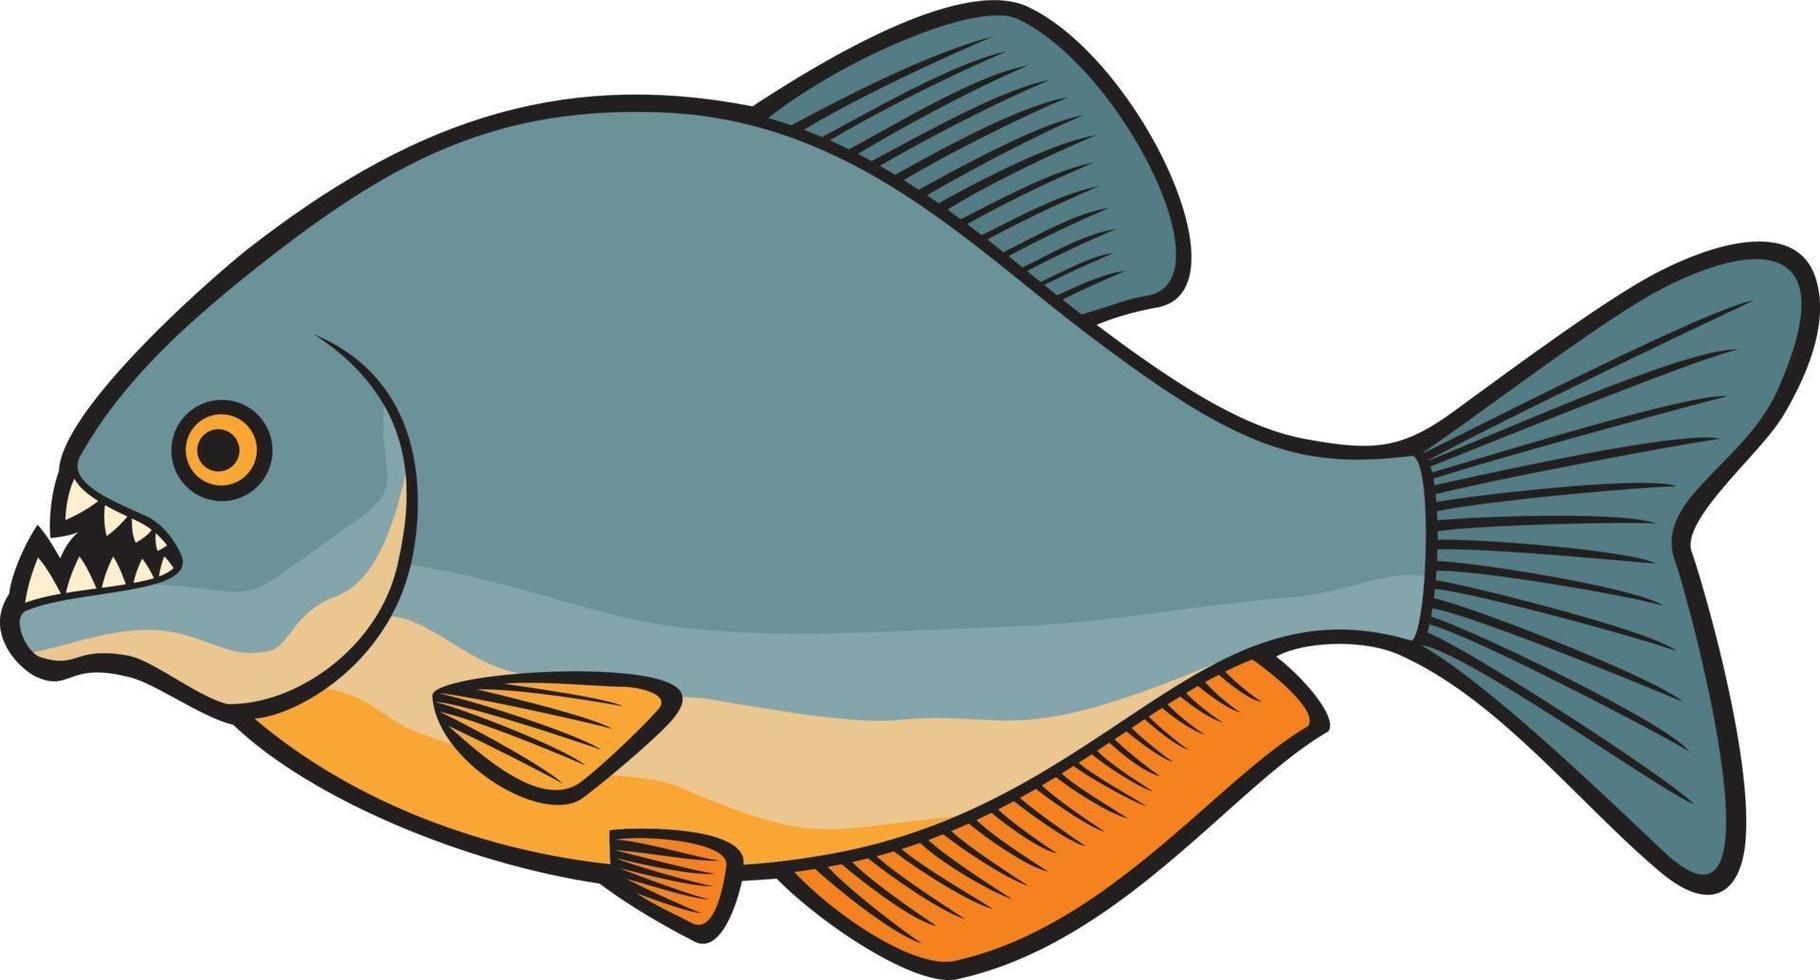 wütender Piranha-Fisch-Cartoon-Aufkleber 4335875 Vektor Kunst bei Vecteezy